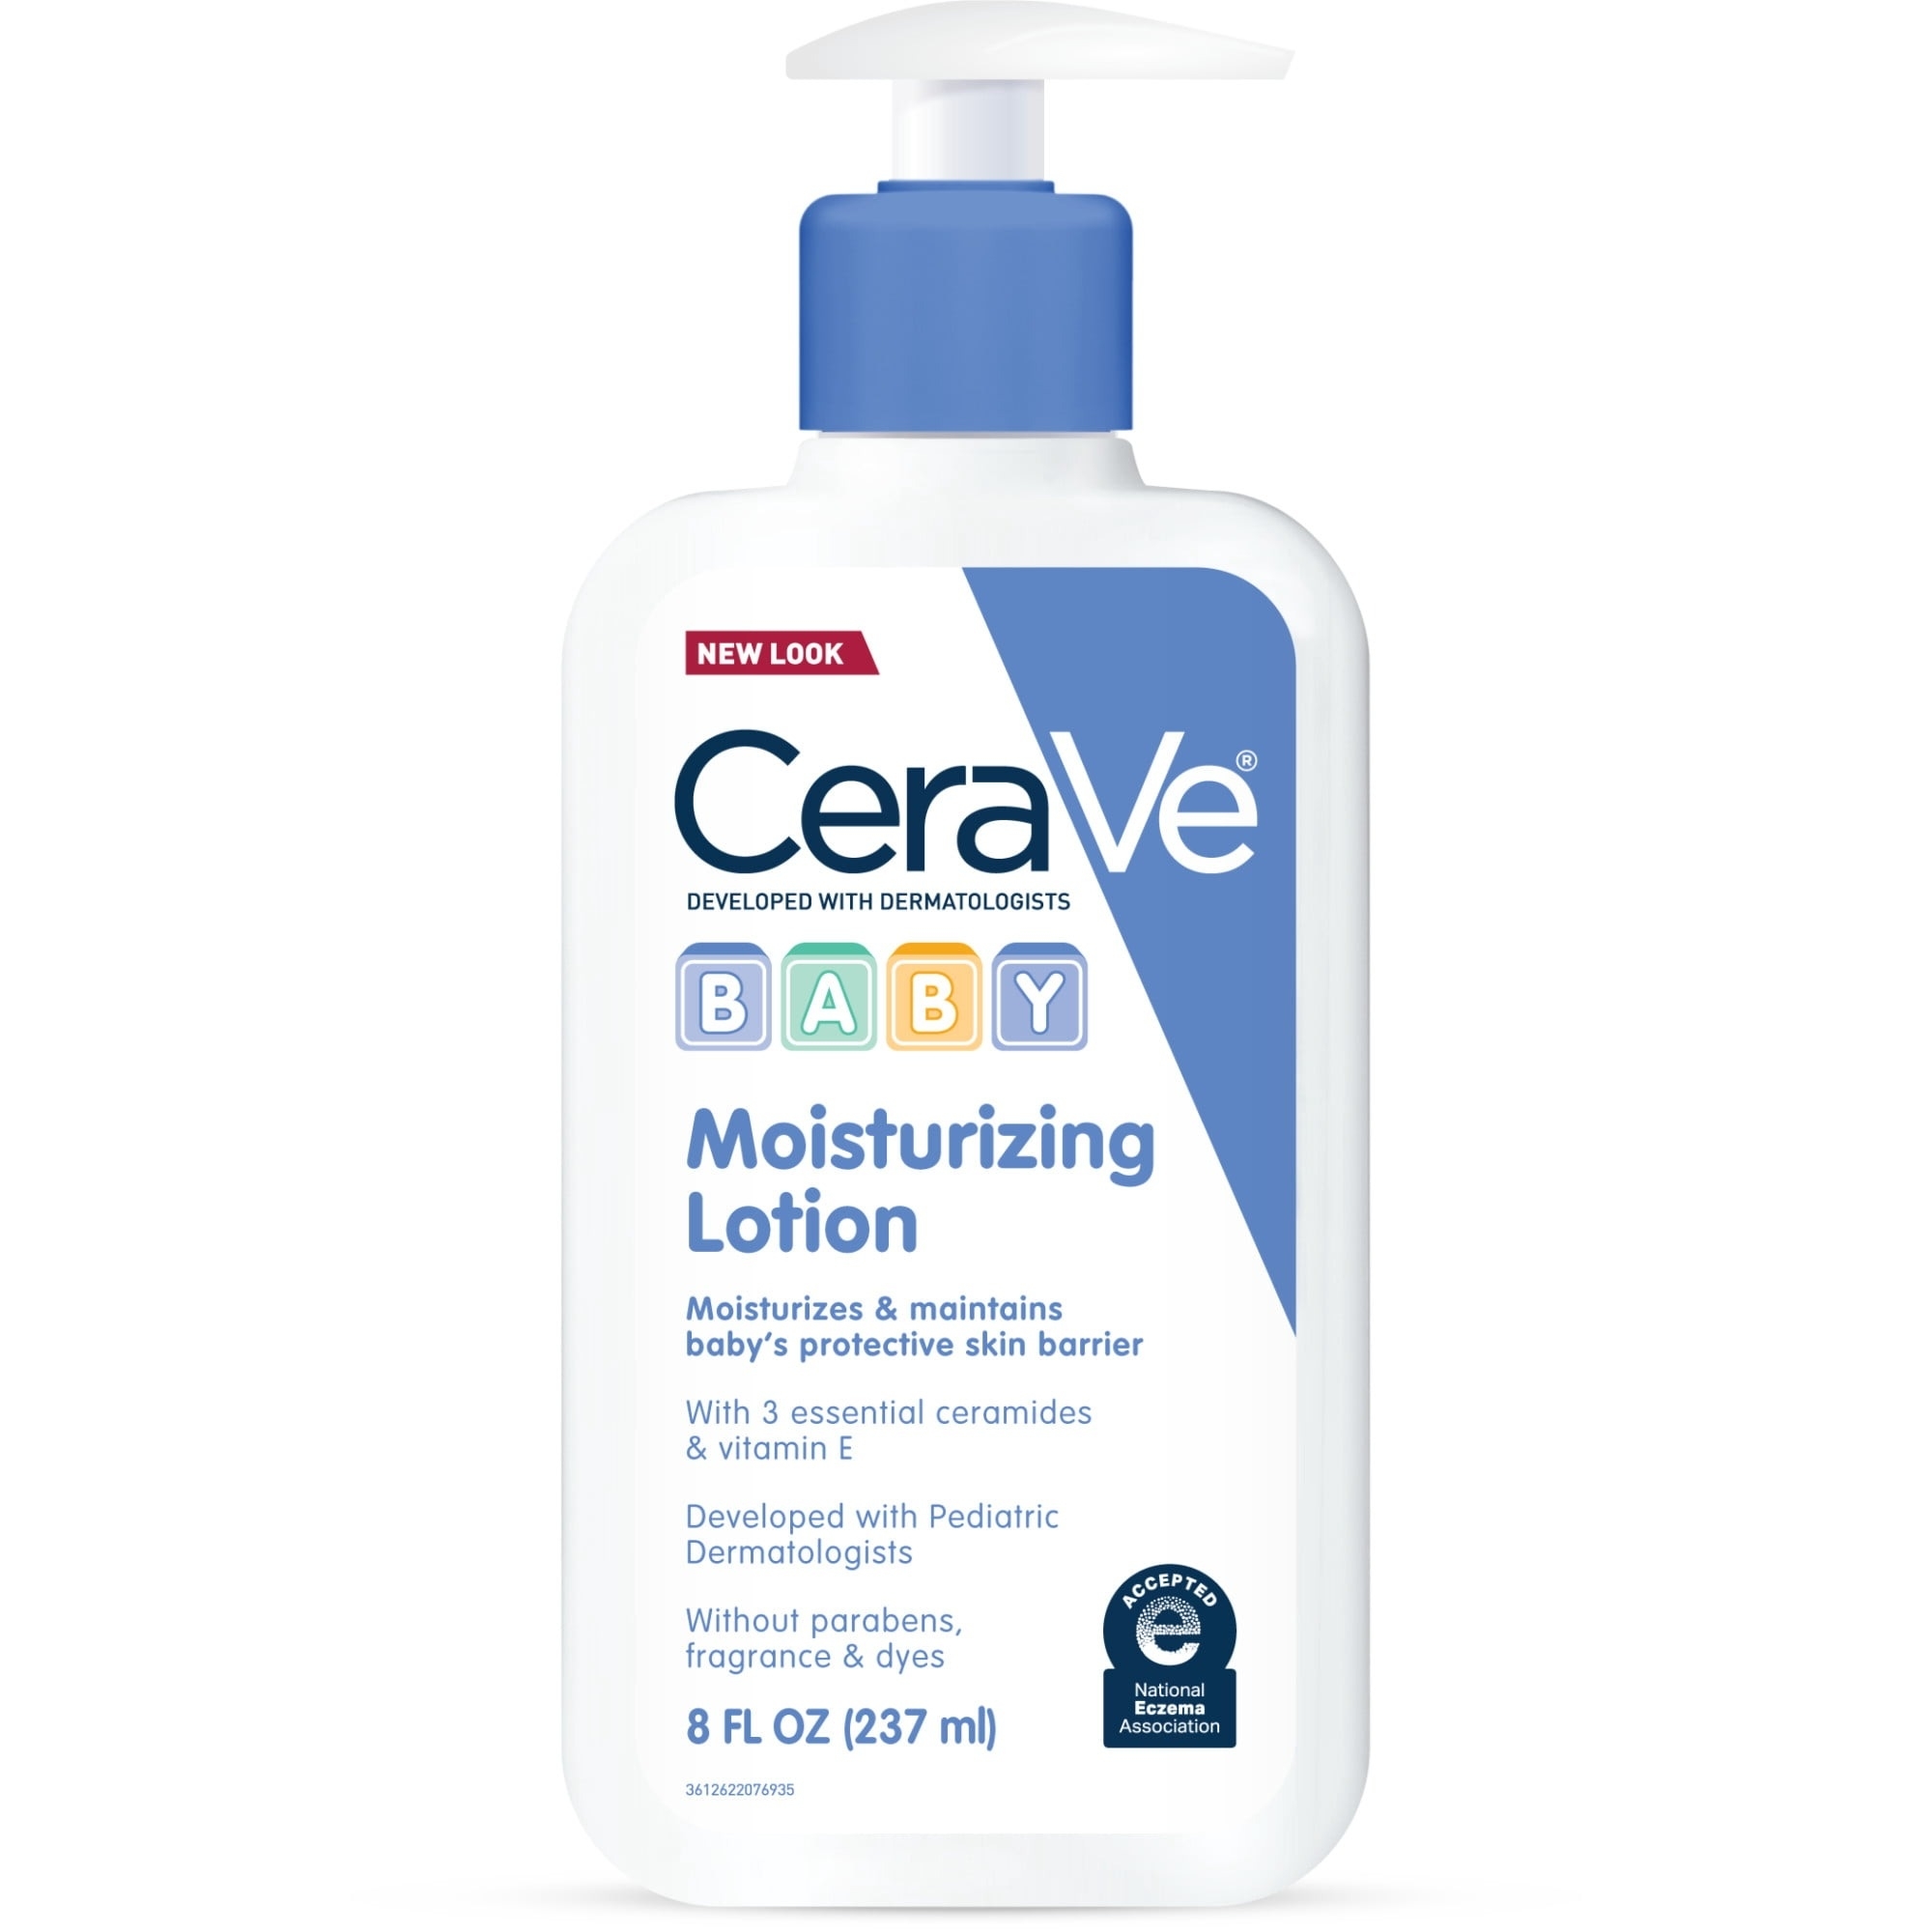 A bottle of CeraVe lotion